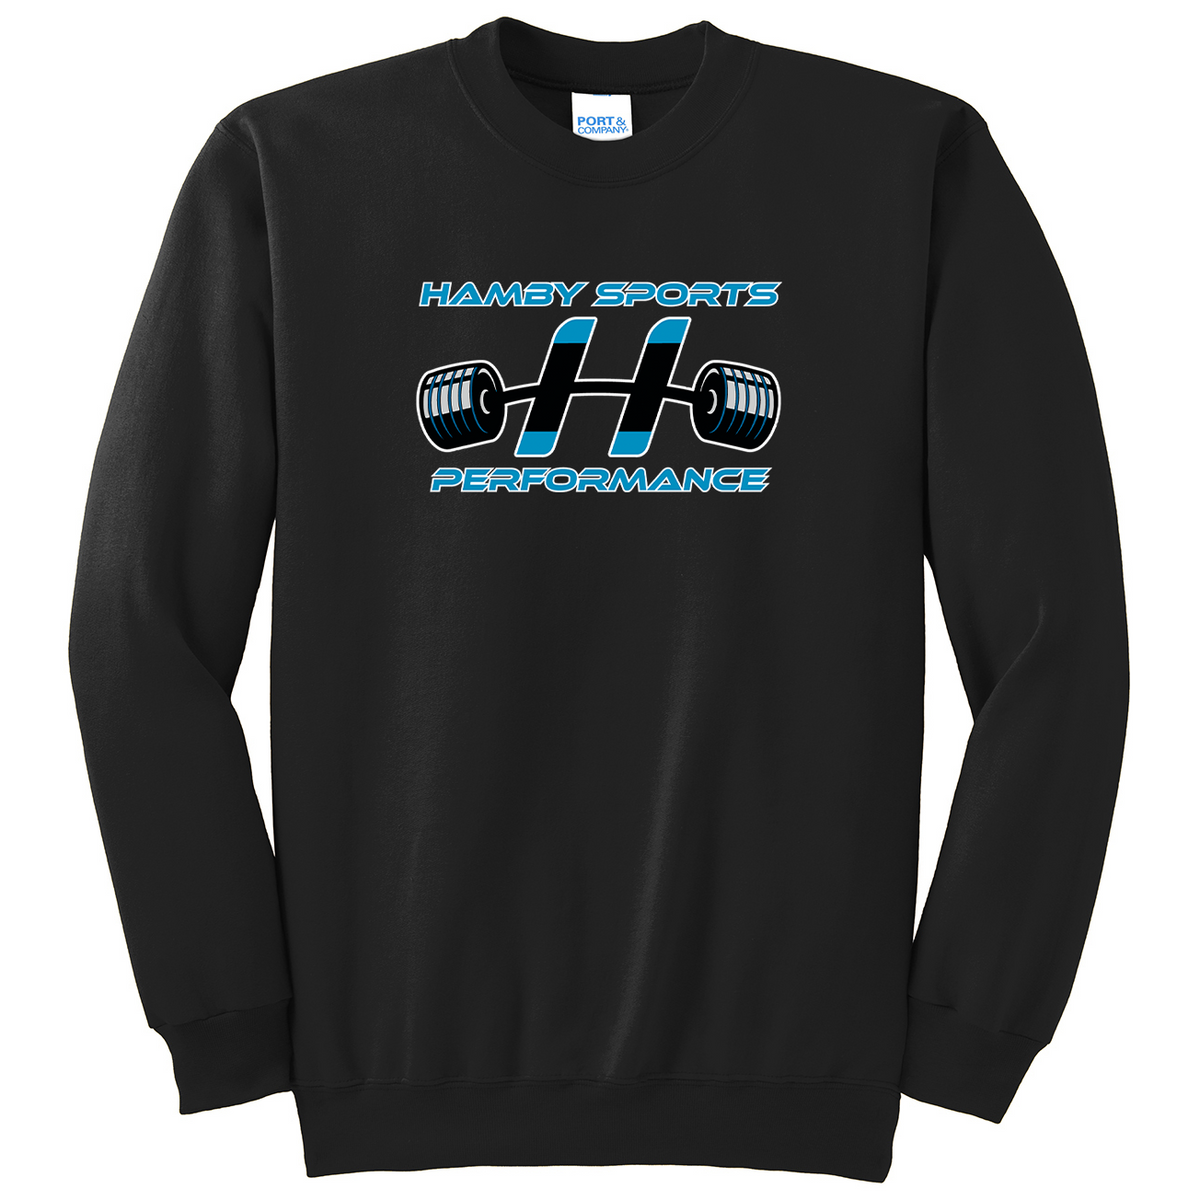 Hamby Sports Performance Crew Neck Sweater